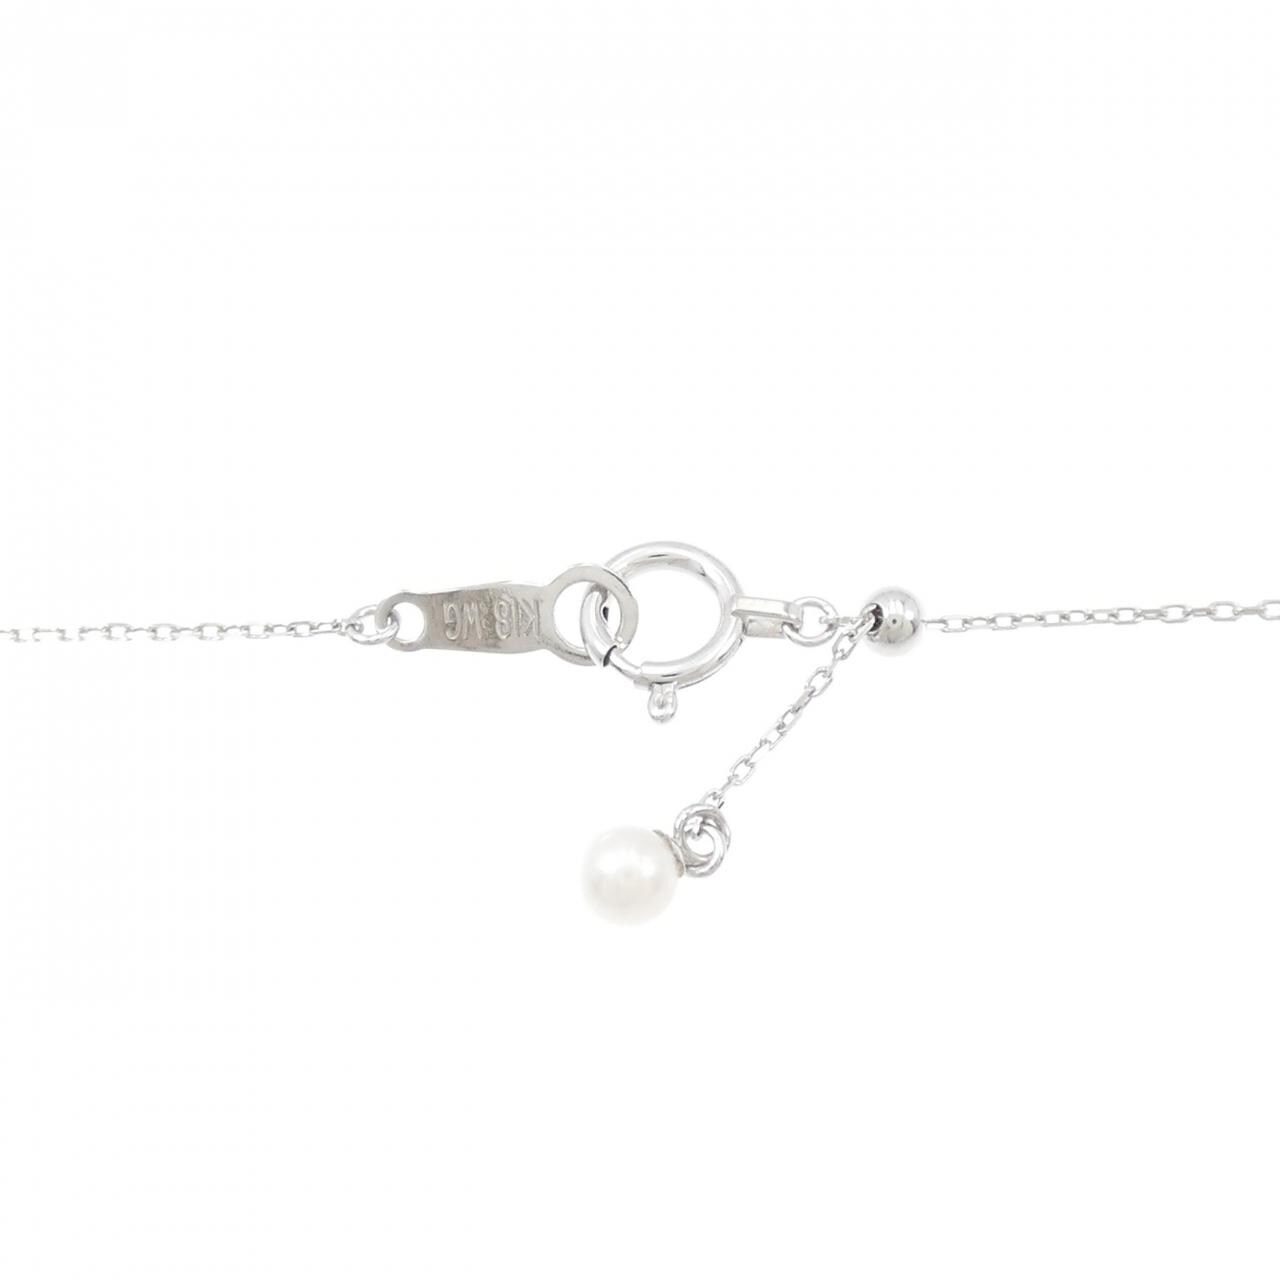 K18WG Moon Diamond Necklace 0.15CT